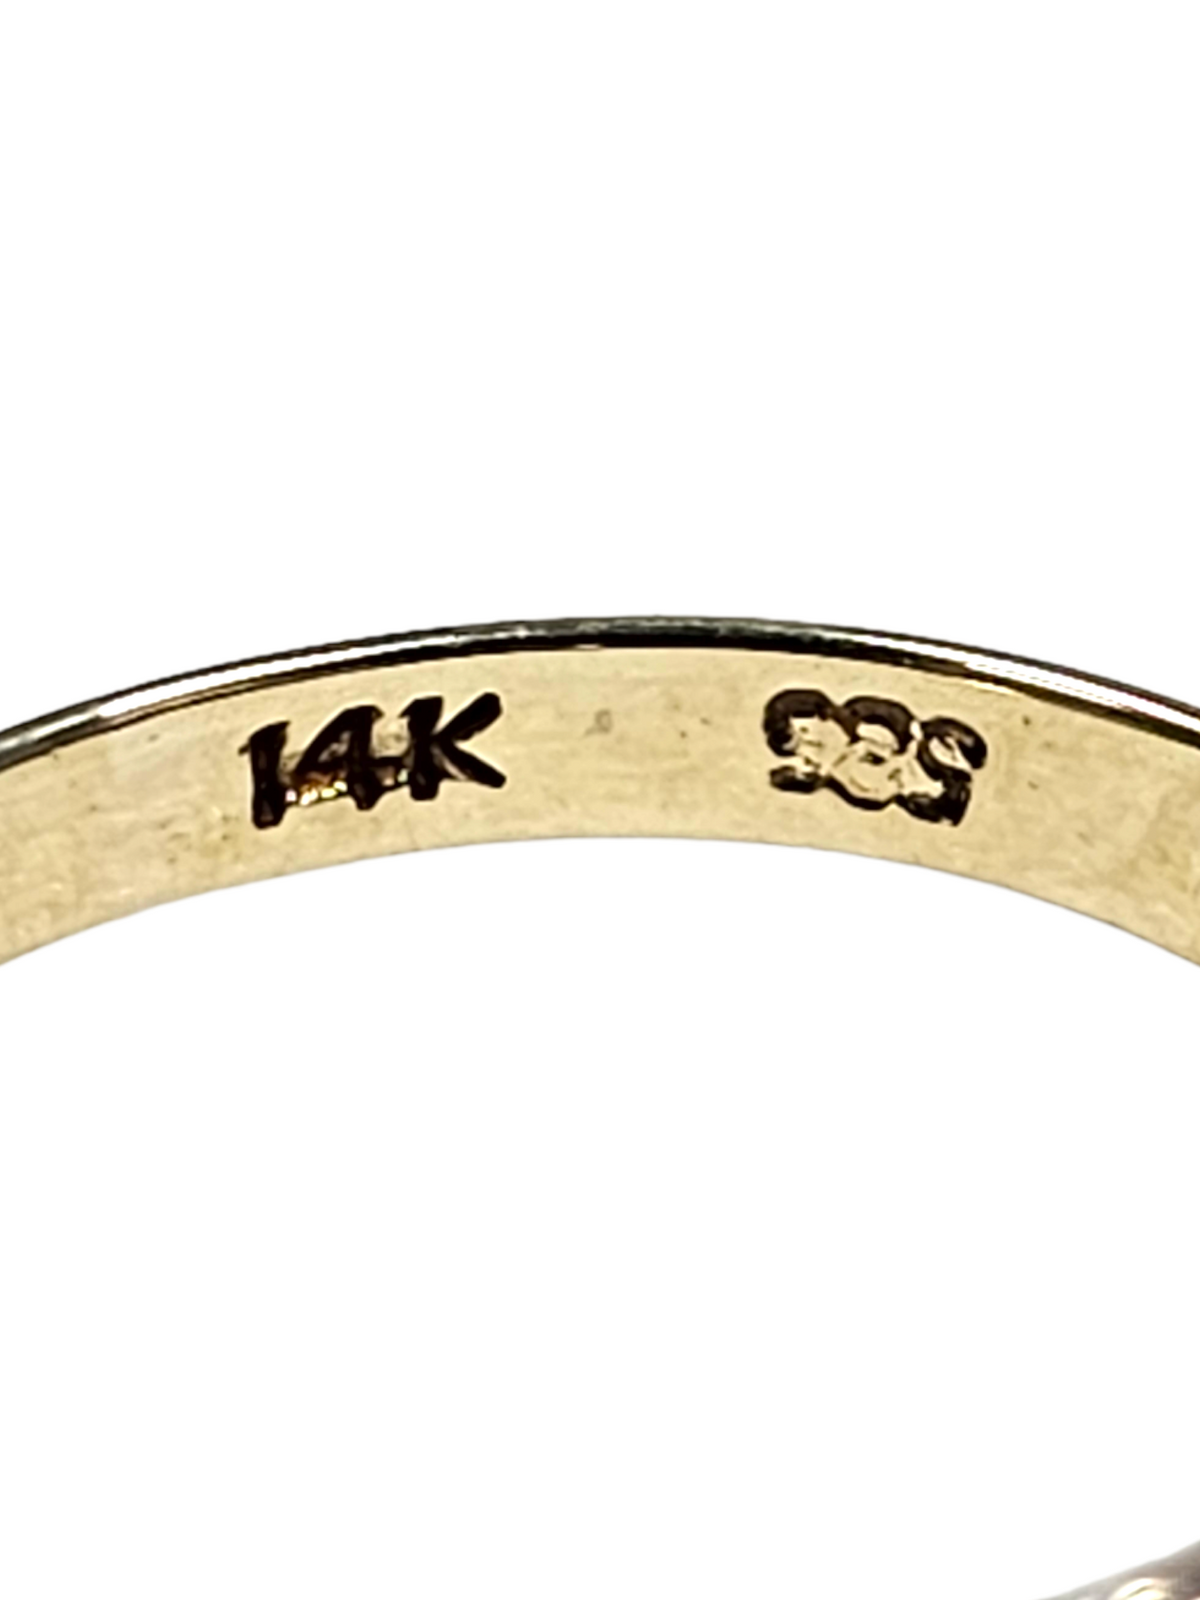 14K Yellow Gold Diamond Cluster Women's Band Ring Size 6.25